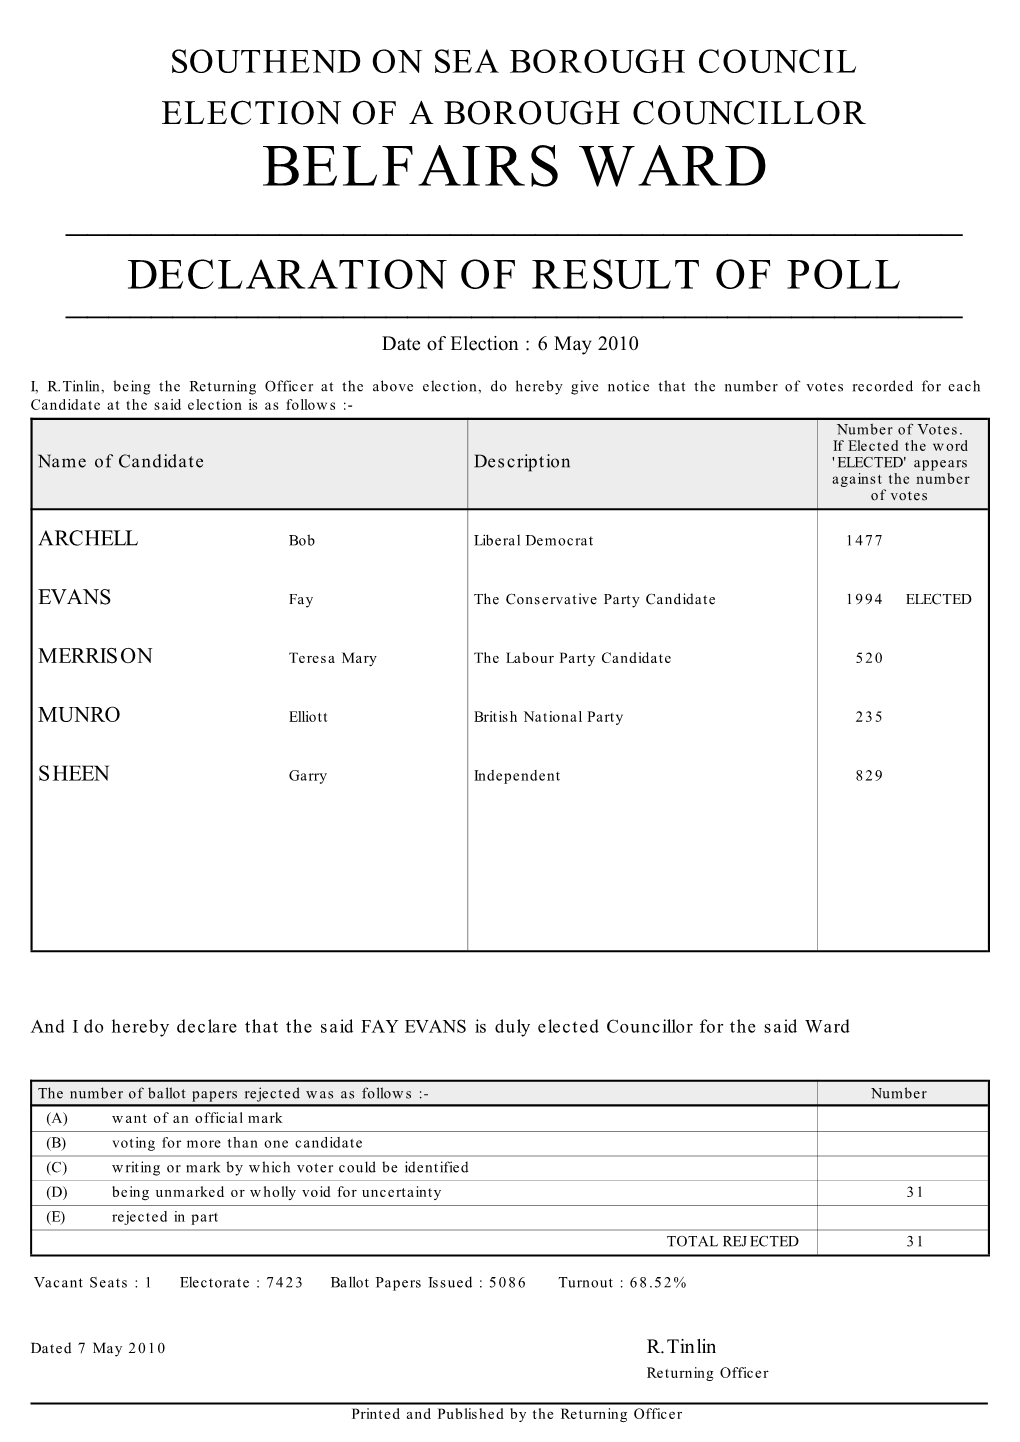 The Borough Council Election Results 2010